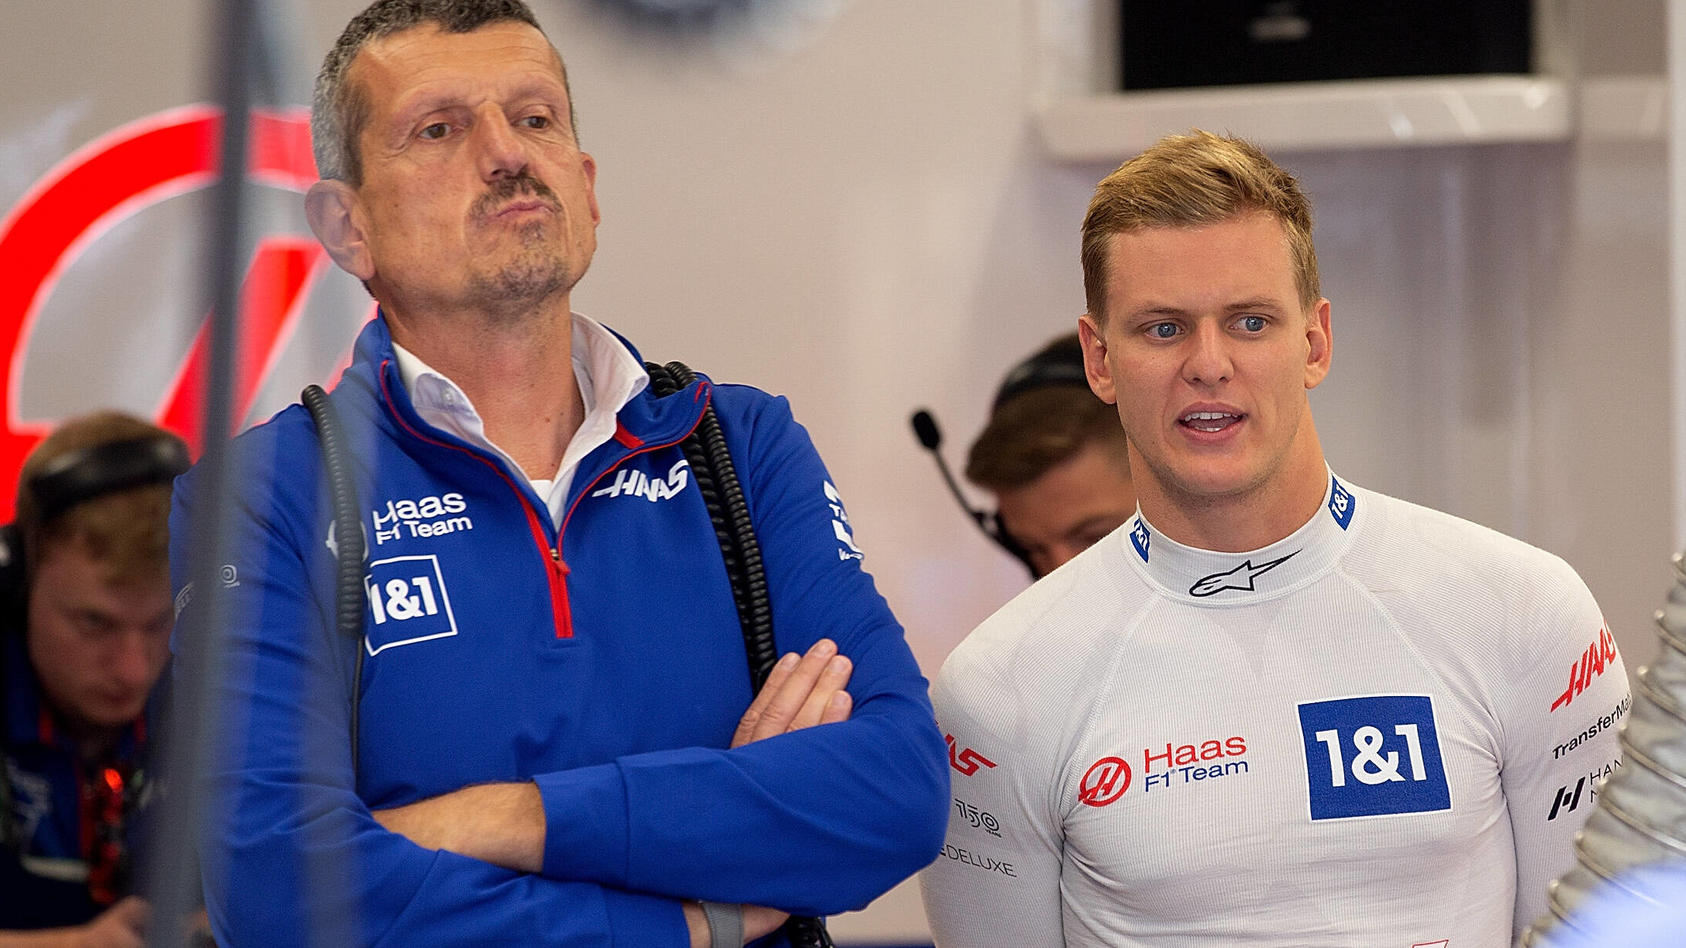 Formel 1 Serie enthüllt krasse Haas-Lästereien über Mick Schumacher